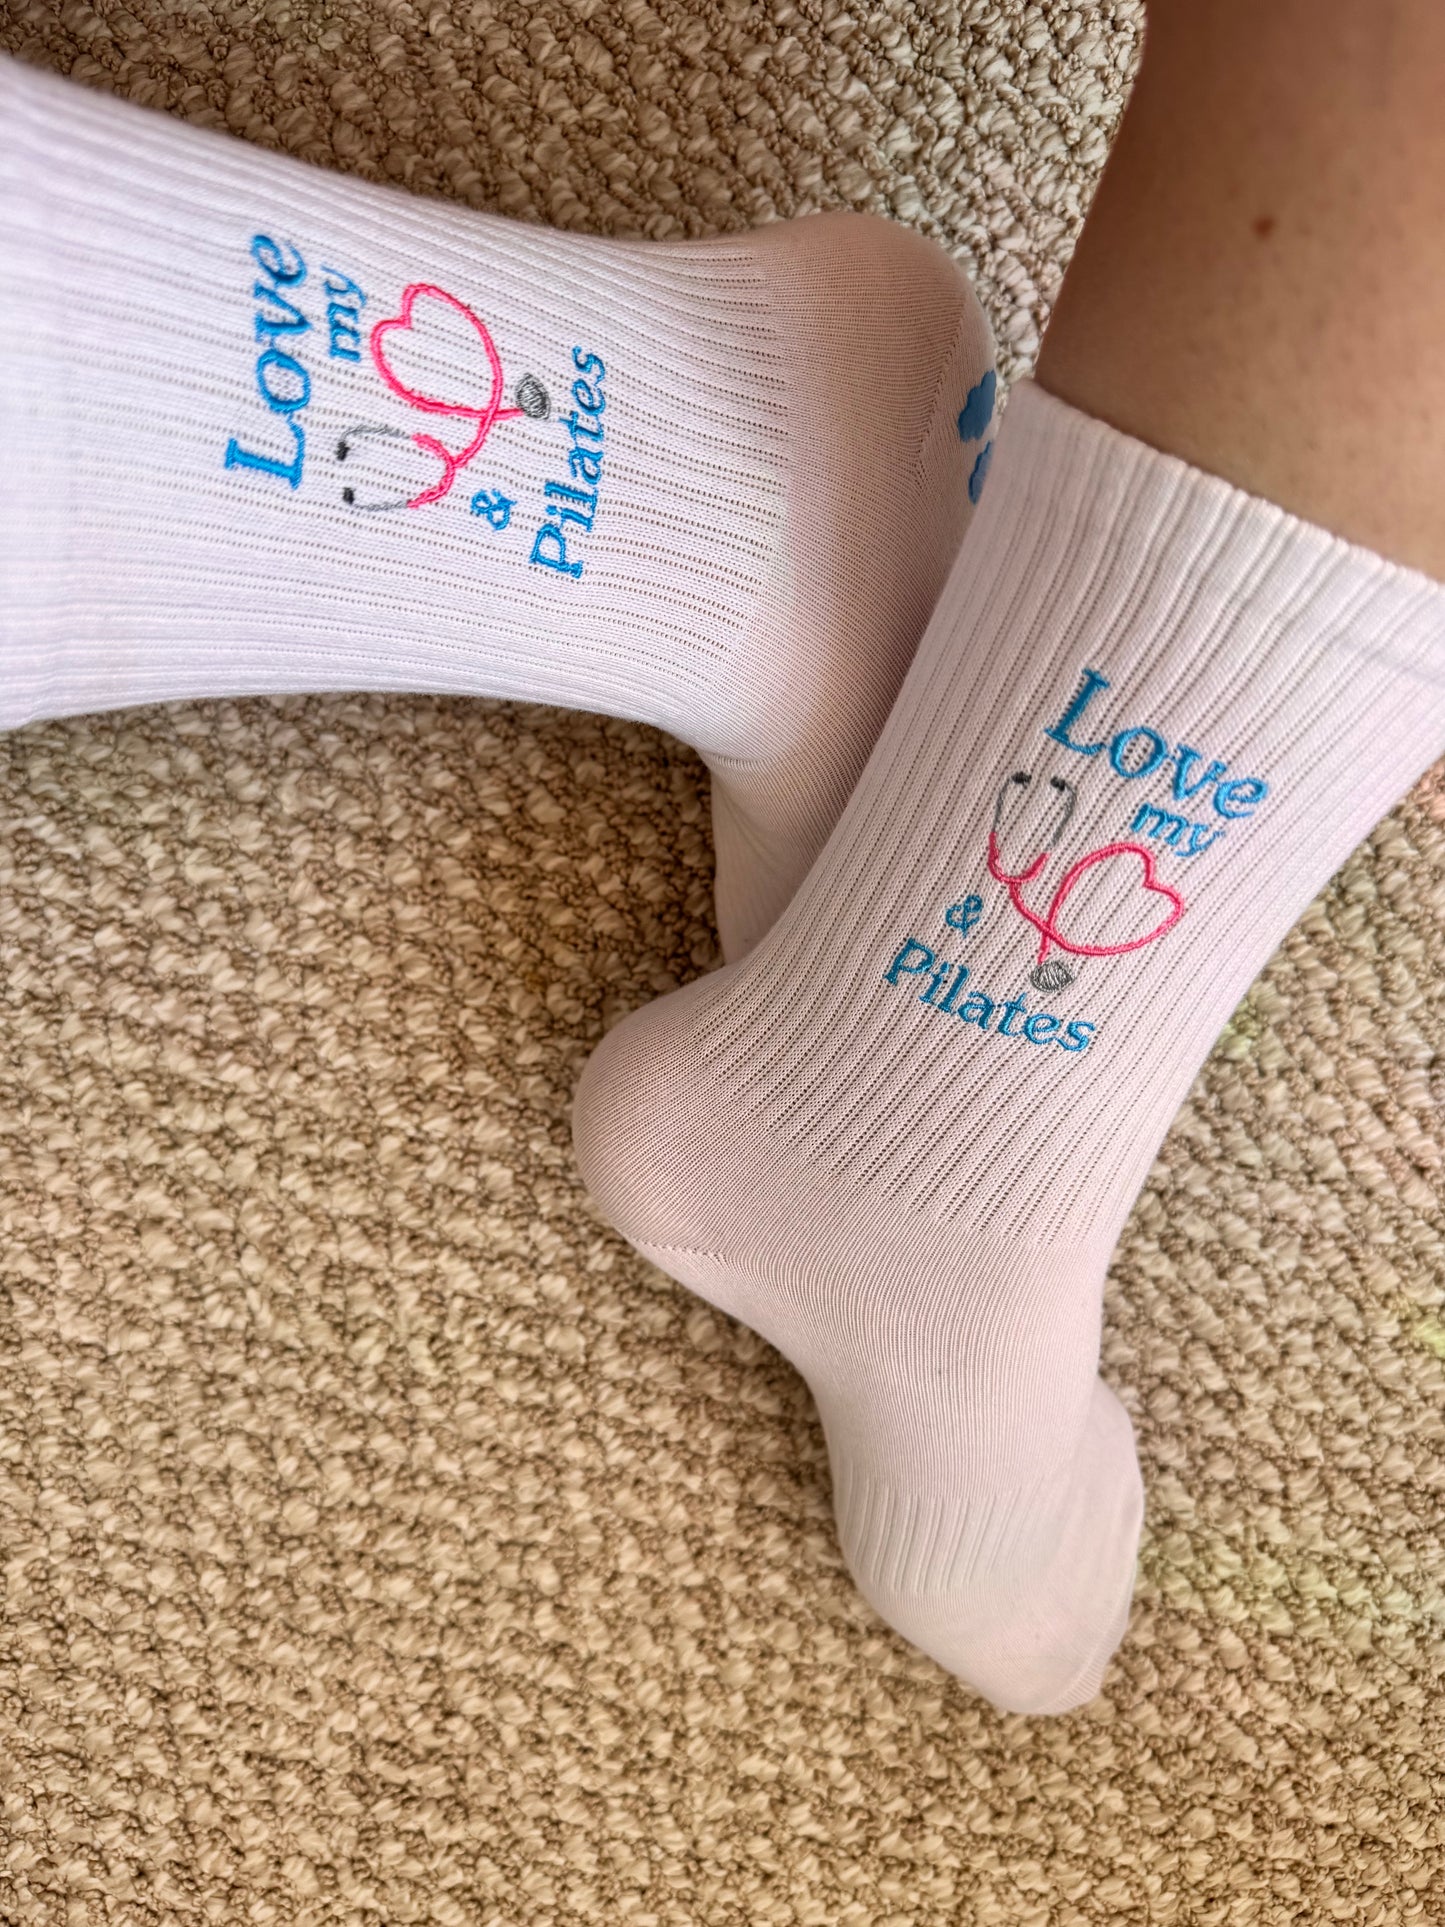 " I love my stethoscope" Pilates grip socks